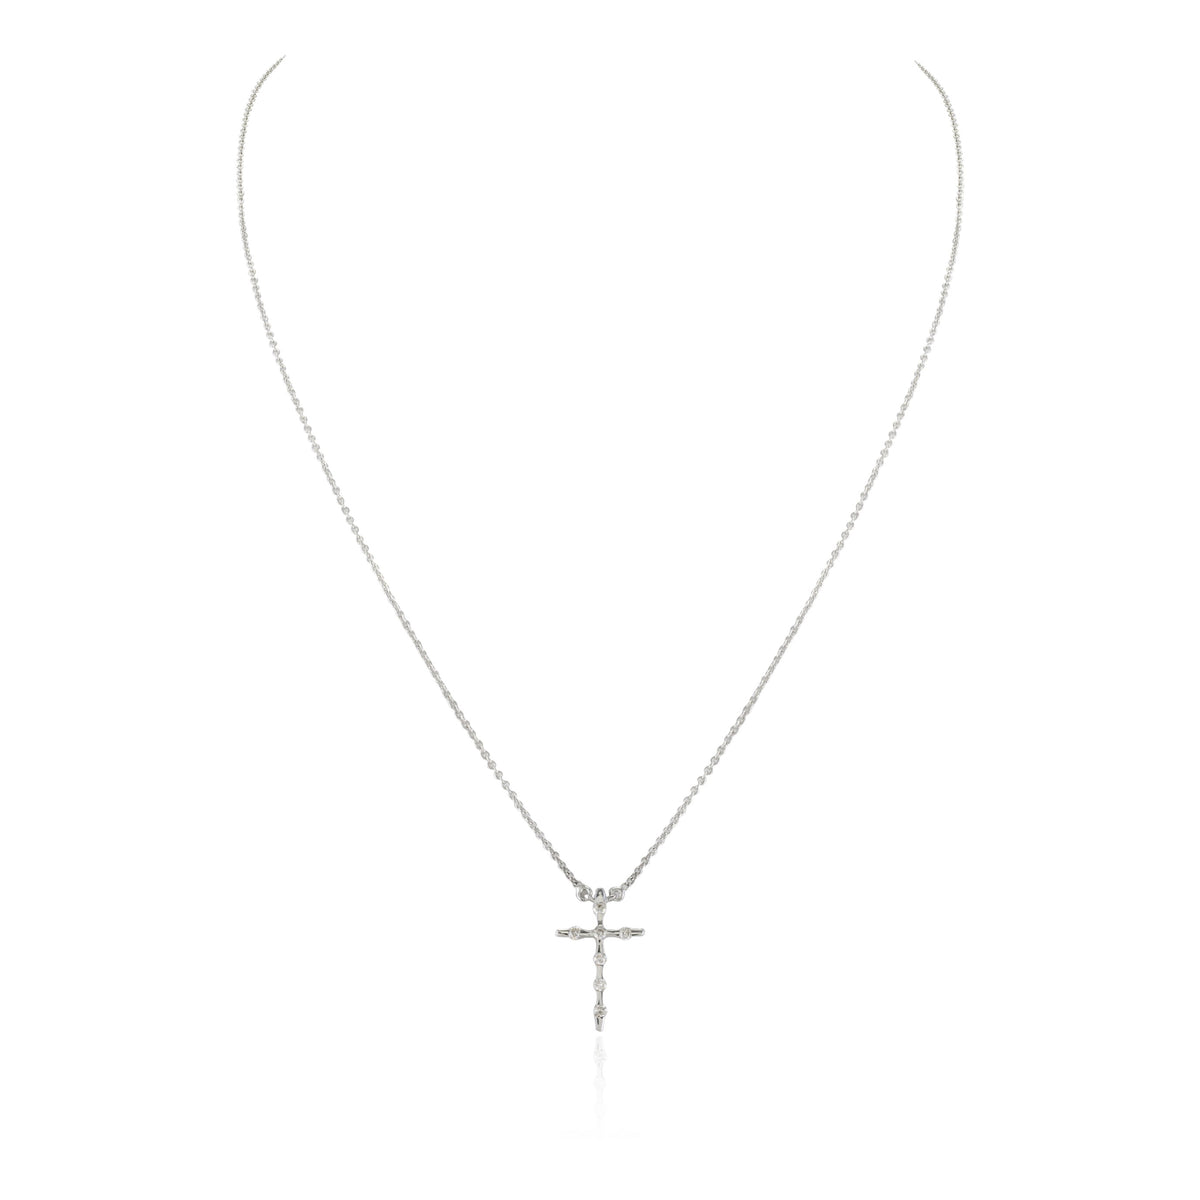 18K Gold Diamond Cross Pendant Necklace